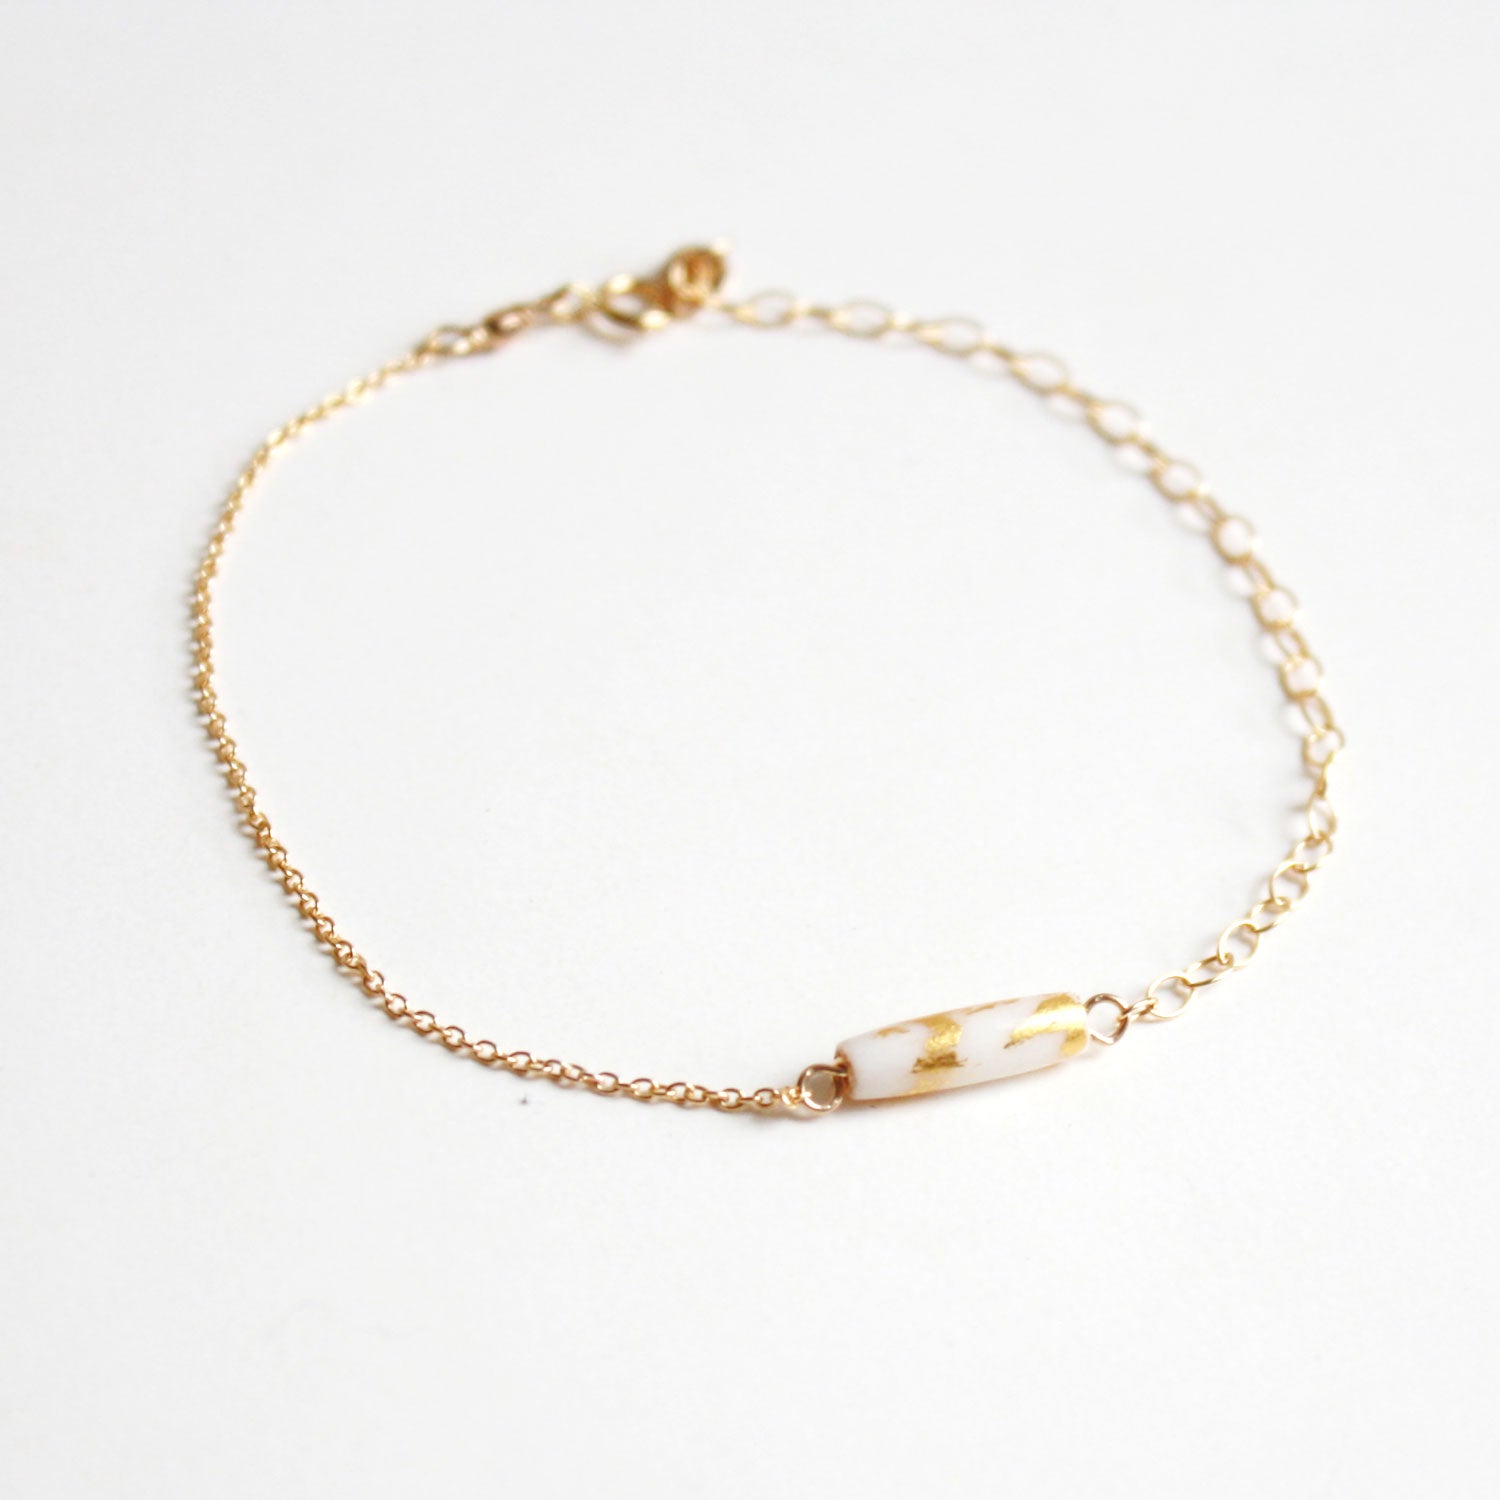 Buy Medium Golden Simple Chain Bracelet